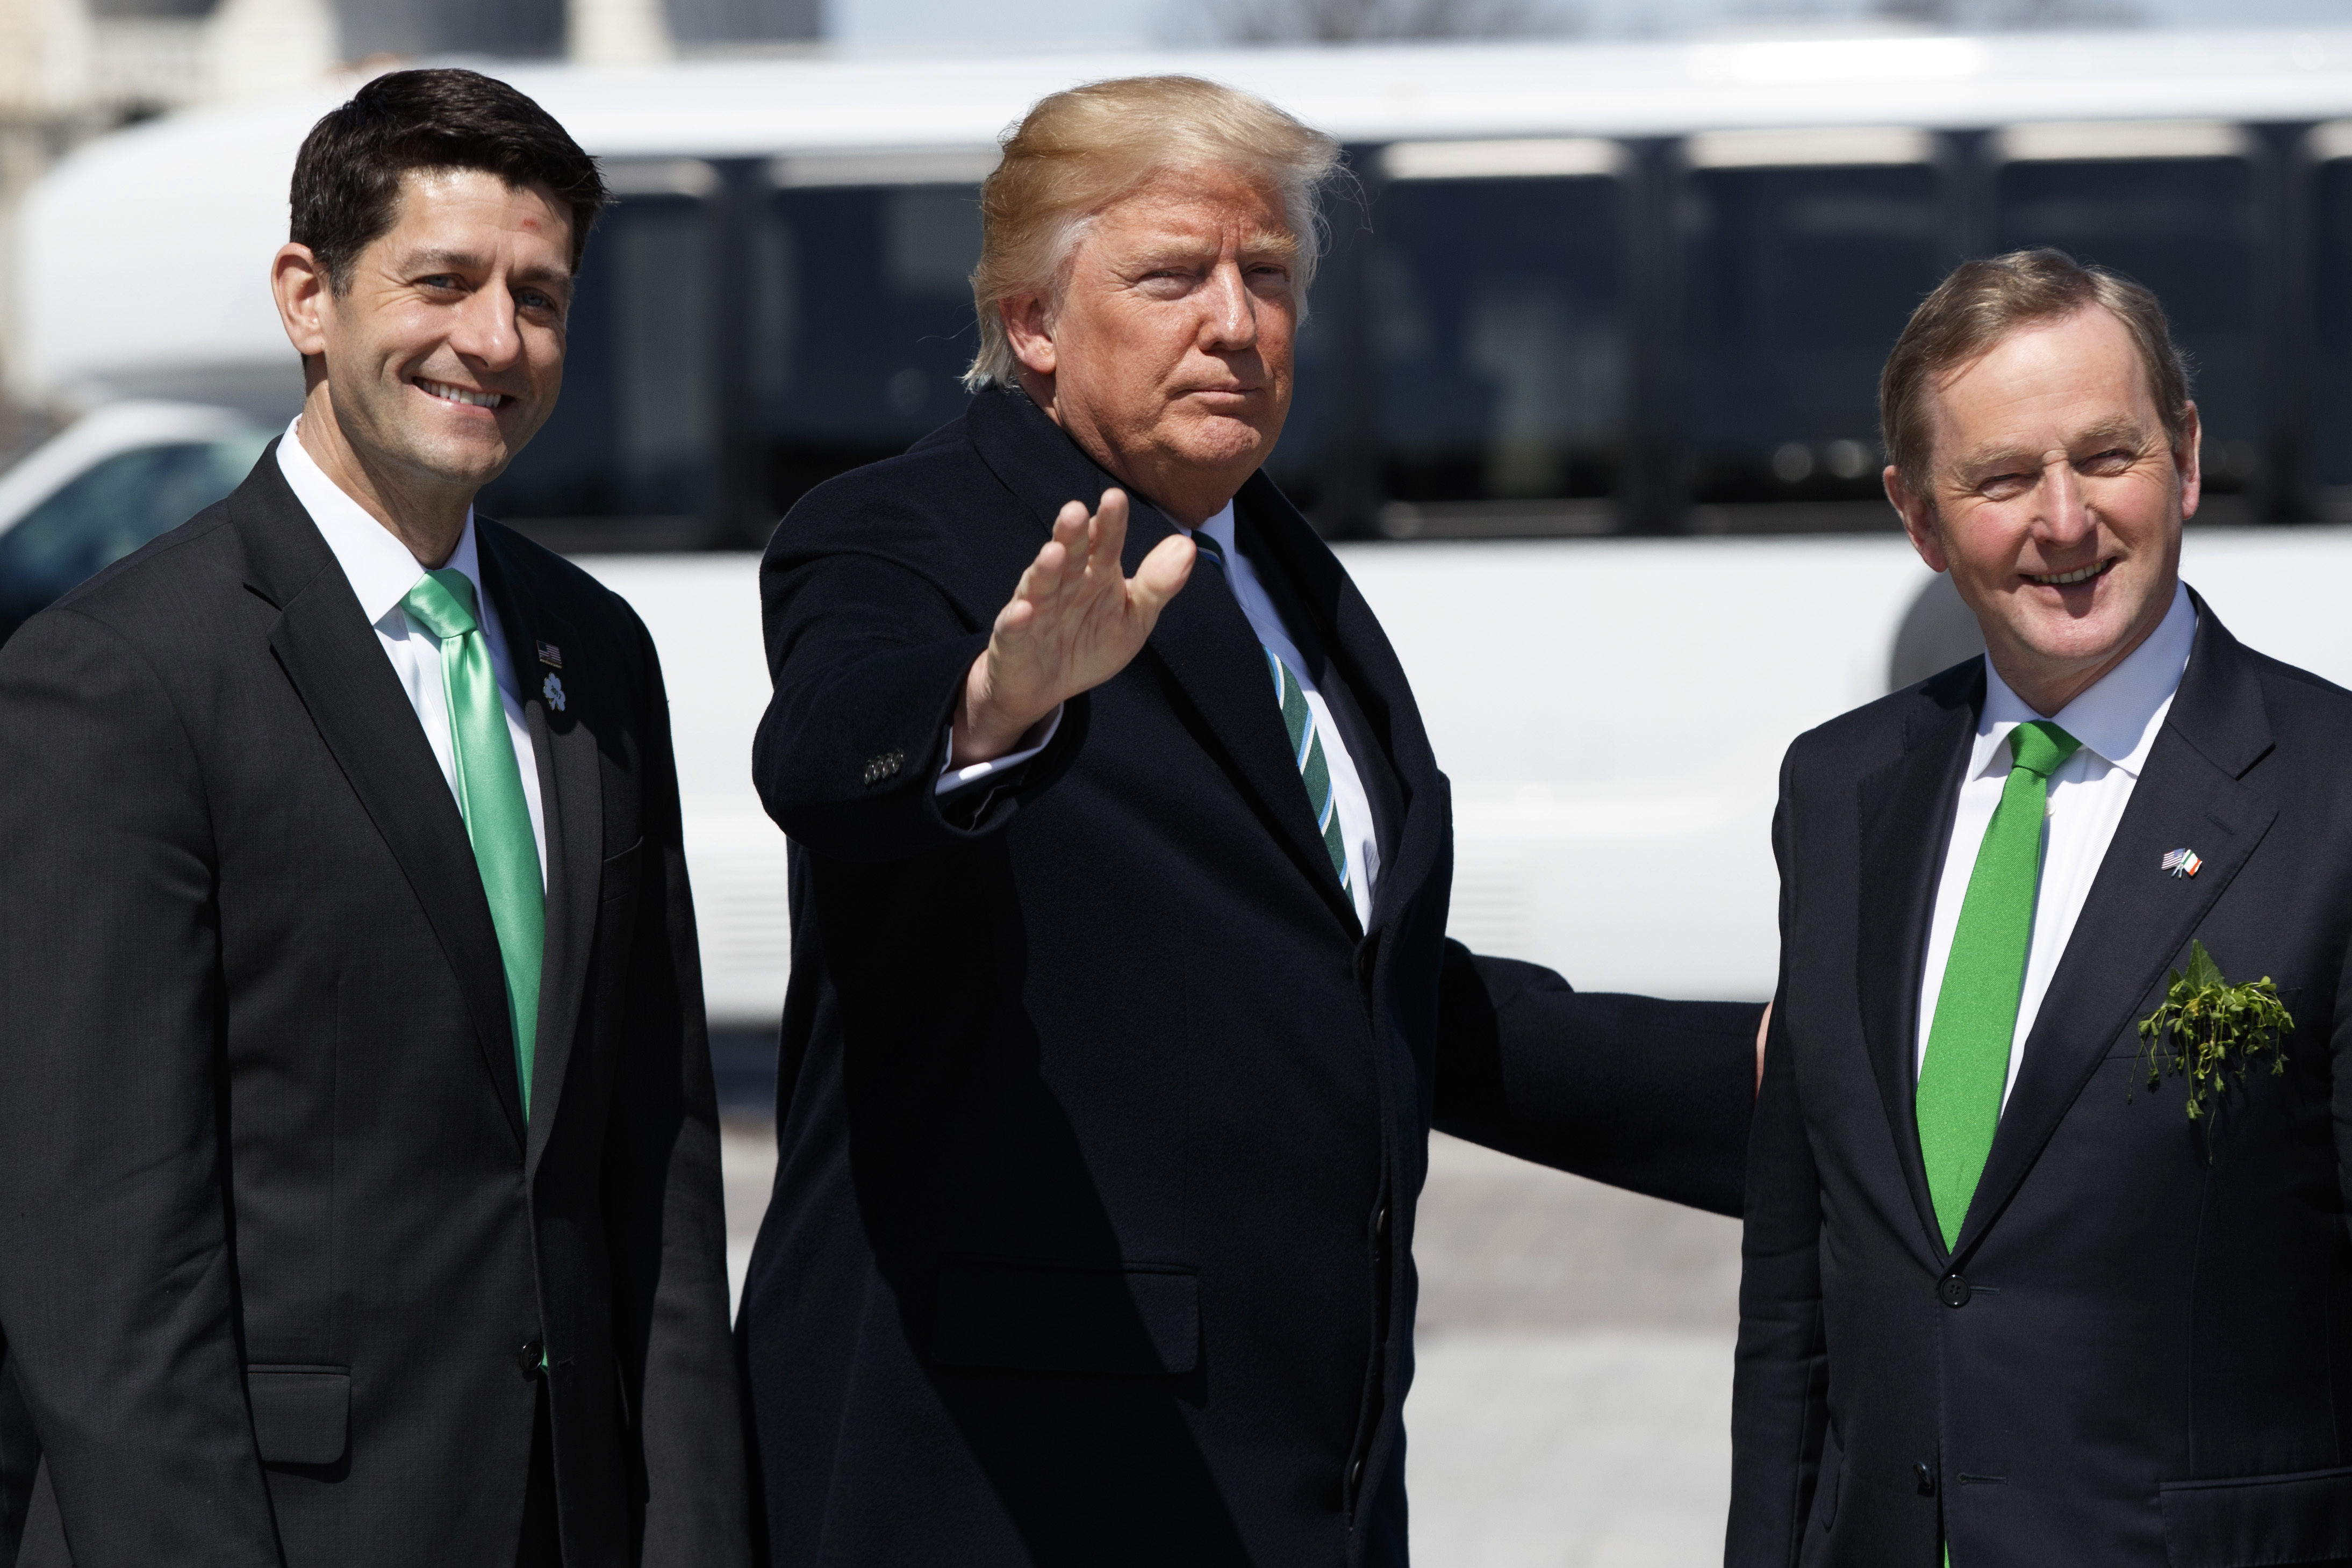 Donald Trump, Enda Kenny, and Paul Ryan in Washington, D.C. 